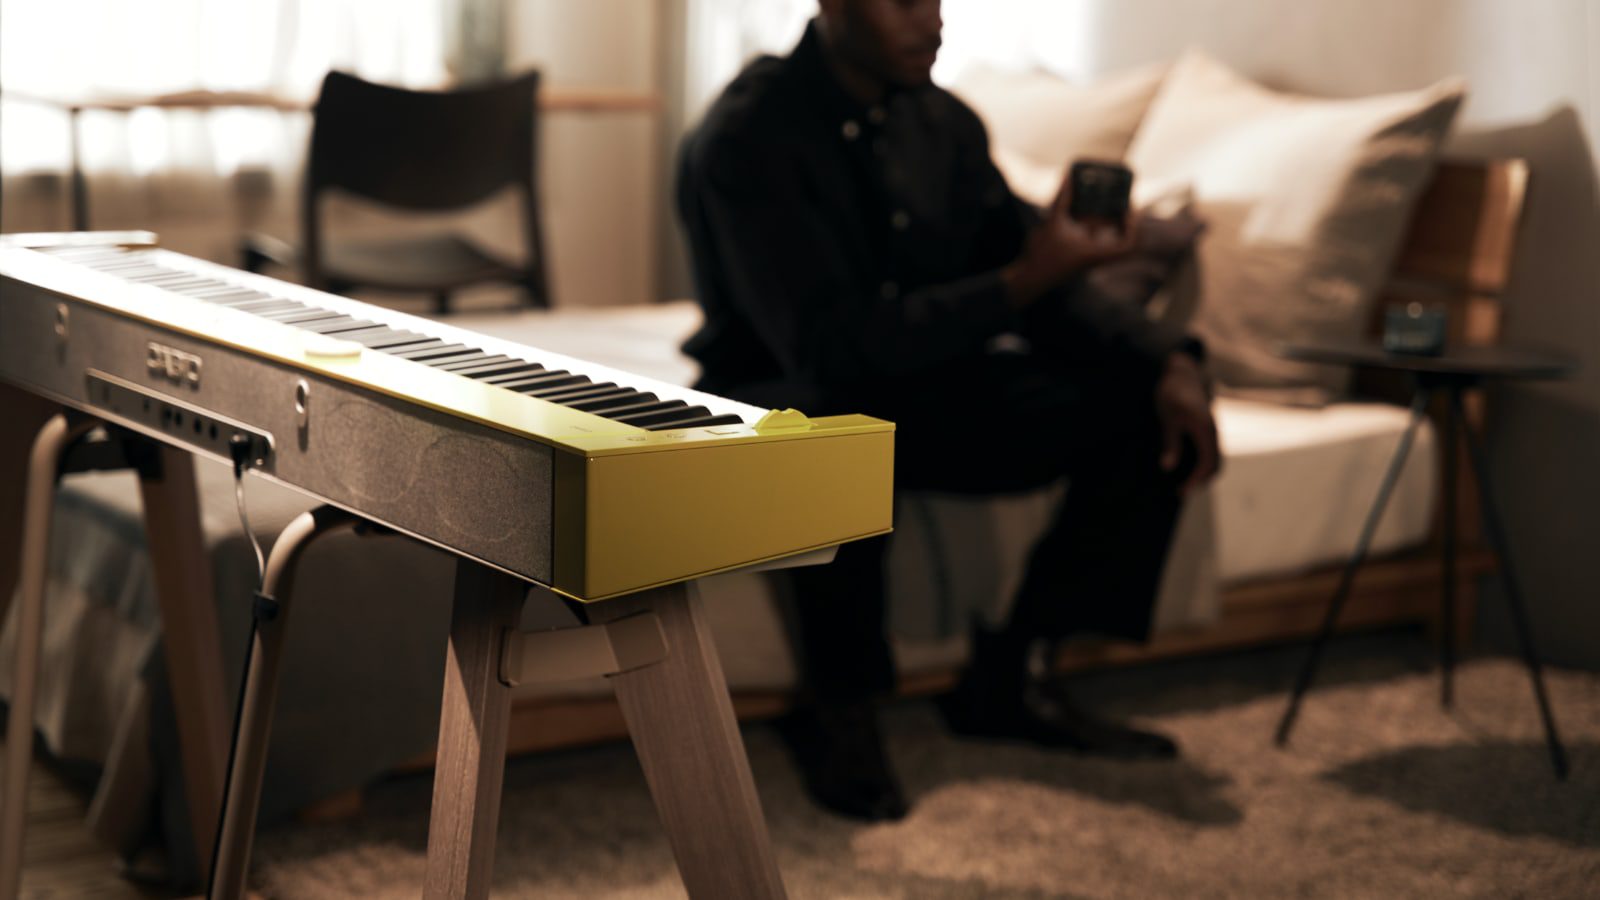 Casio PX-S7000 - Portable Piano mit modernem & smartem Design (Bildquelle: Casio)